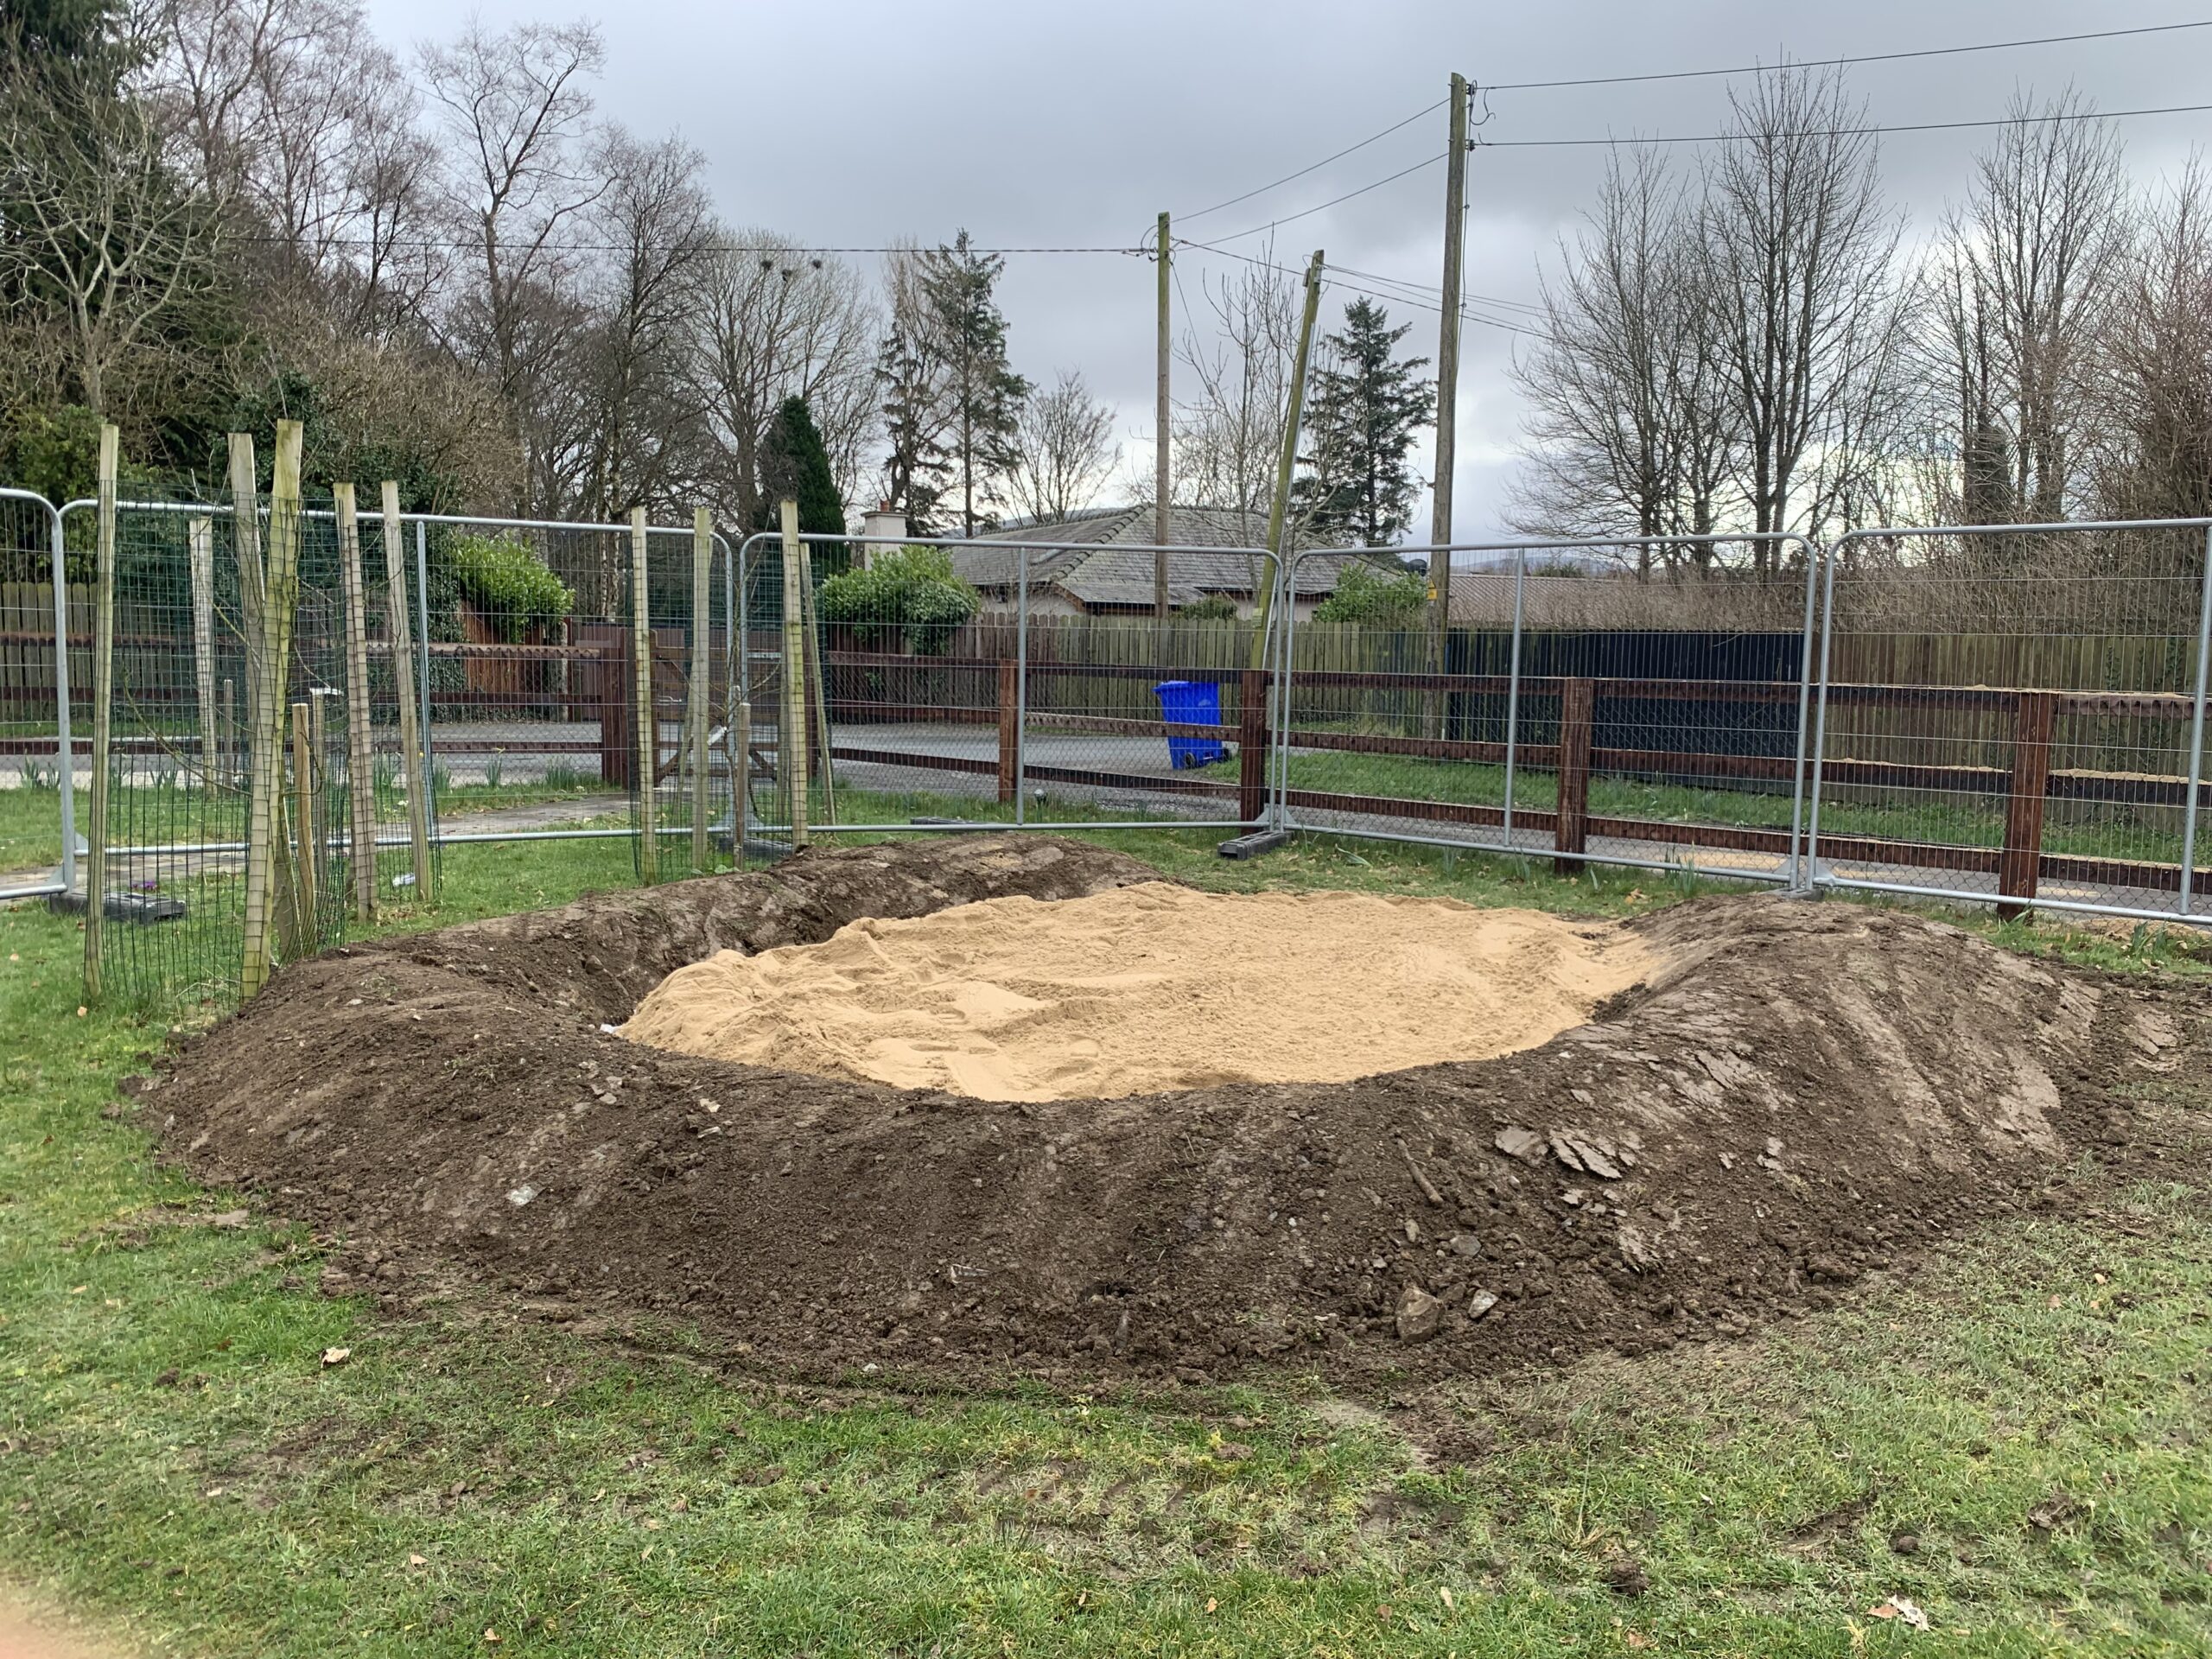 Manor Kilbride Playground Breaks Ground!! – Day 1 – Video and Photos